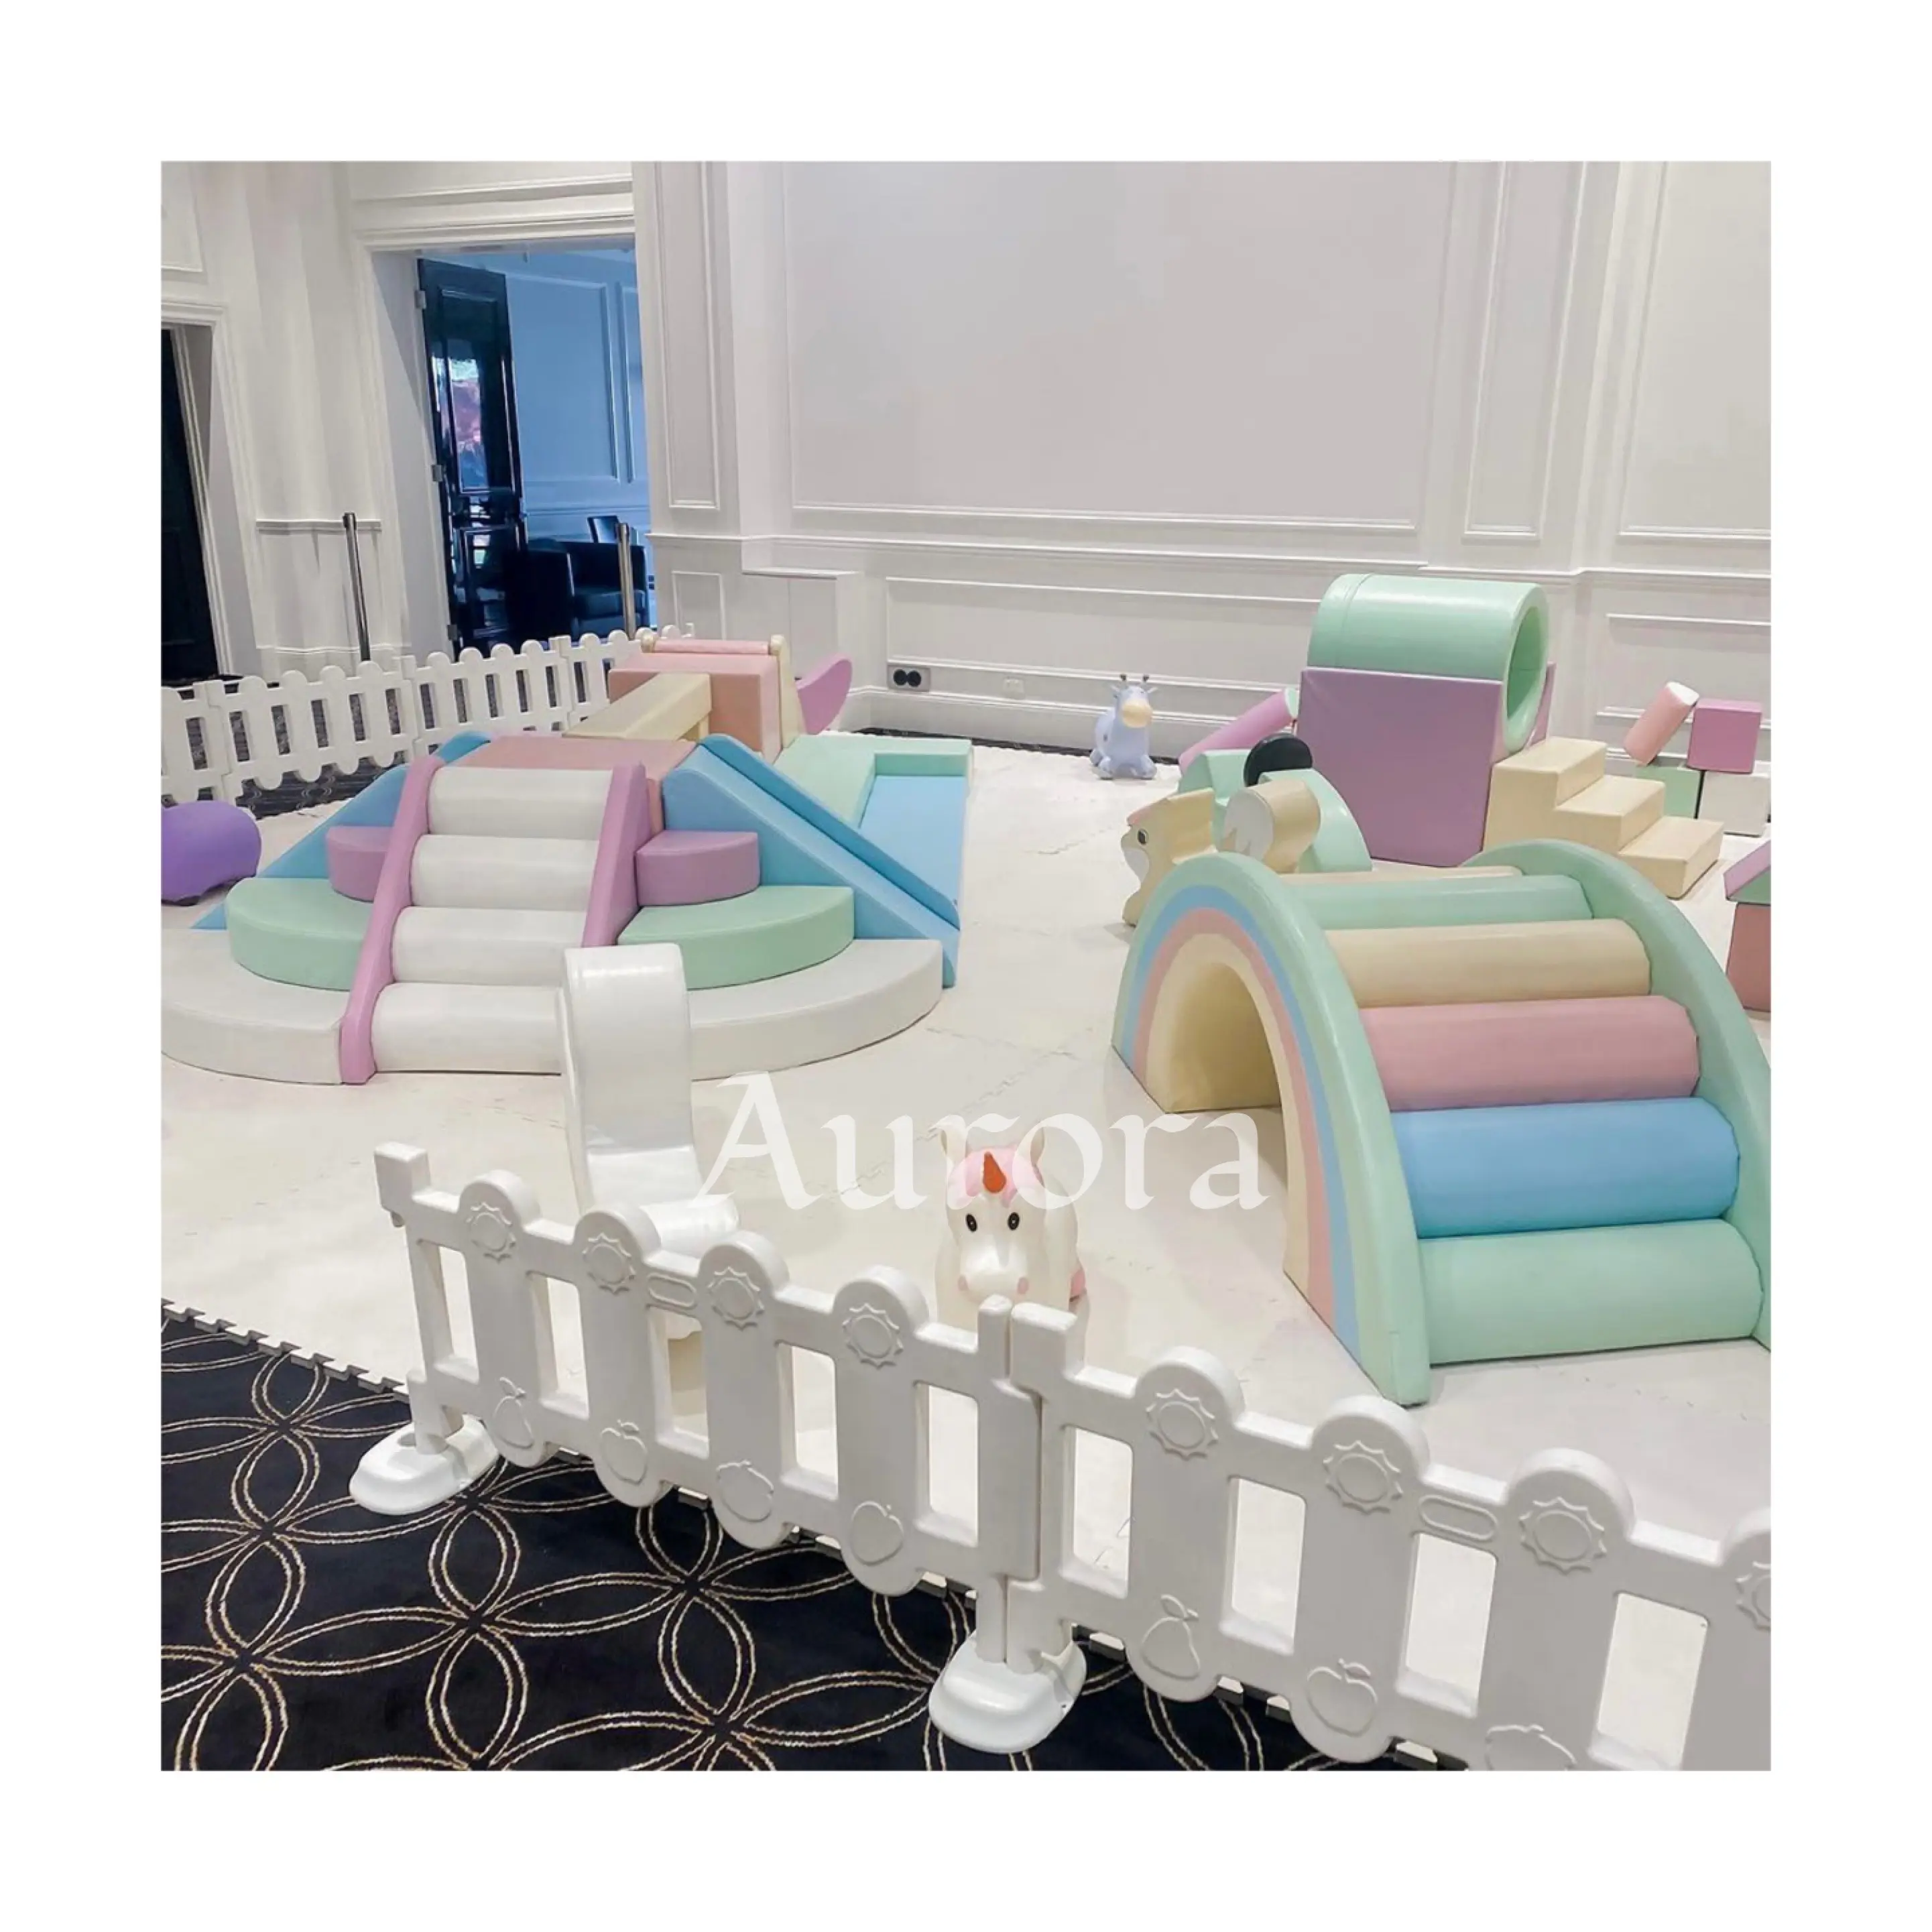 Pastel indoor Baby Indoor Playground bambini commerciali bambini Indoor Soft Play aree attrezzature set recinzione e stuoie